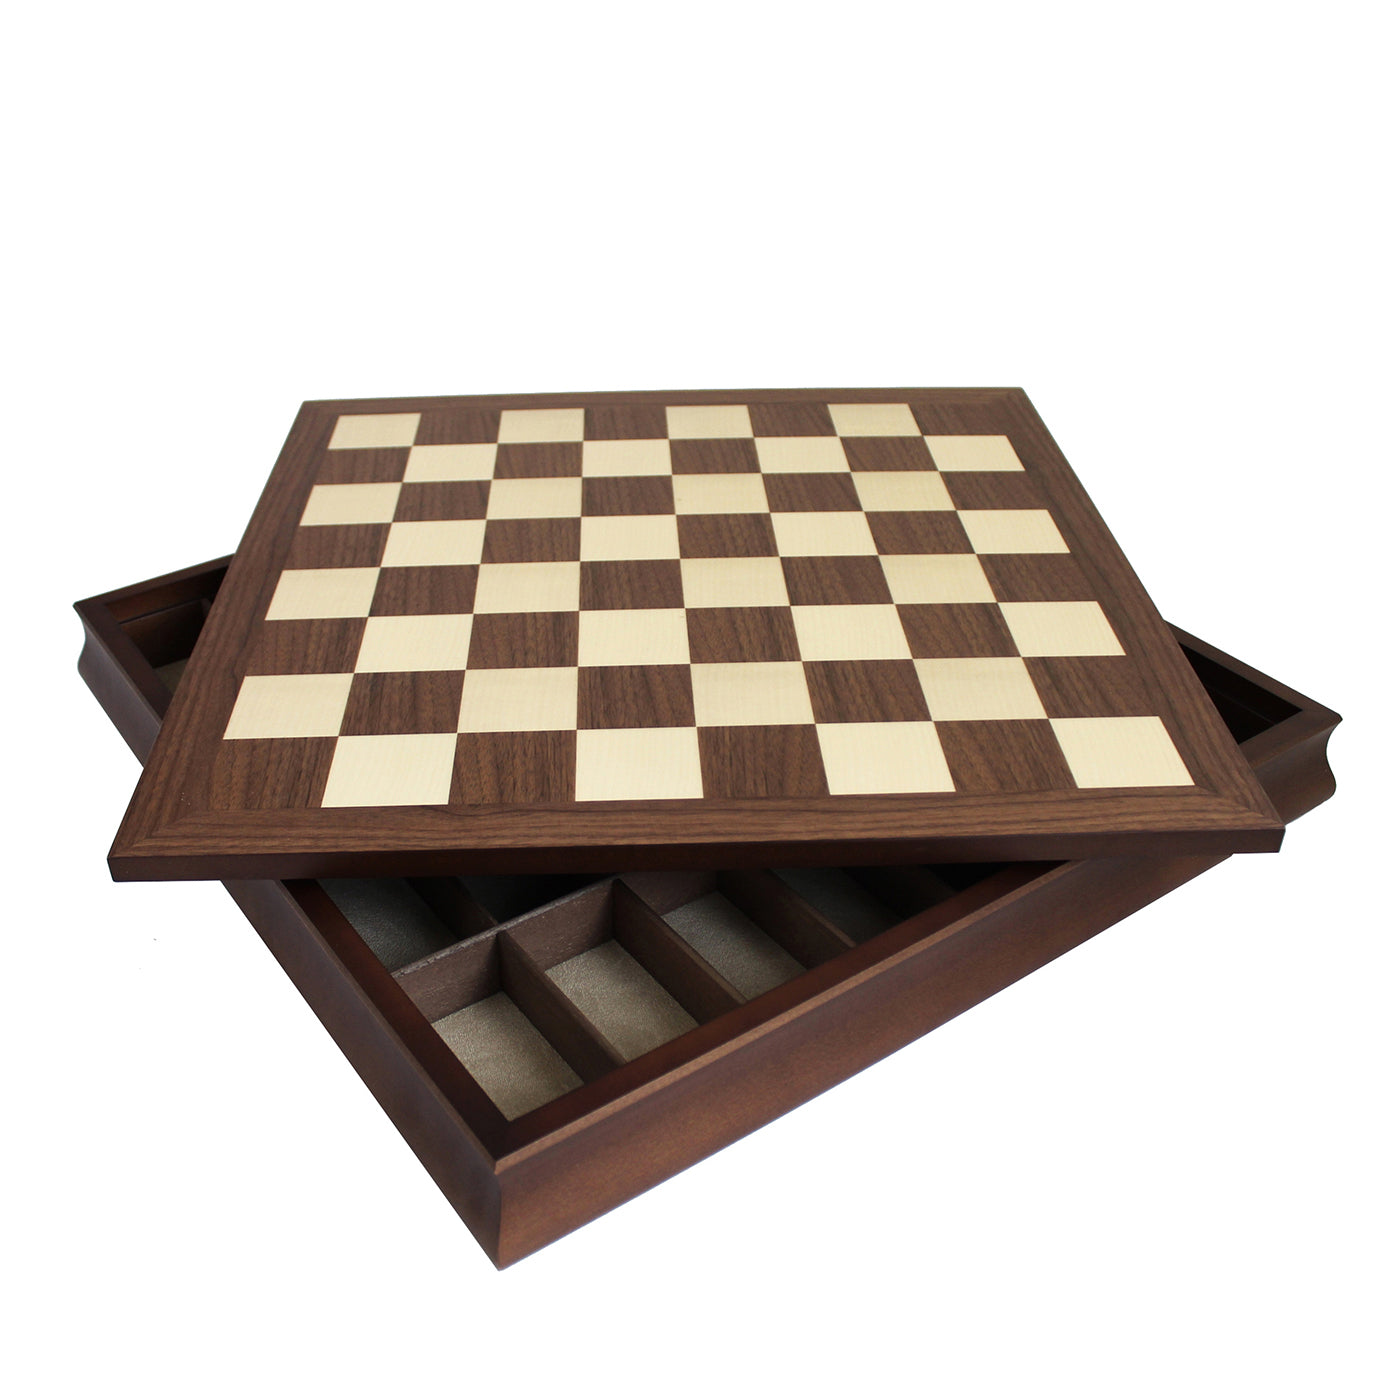 Juego de ajedrez tradicional - Vista alternativa 2